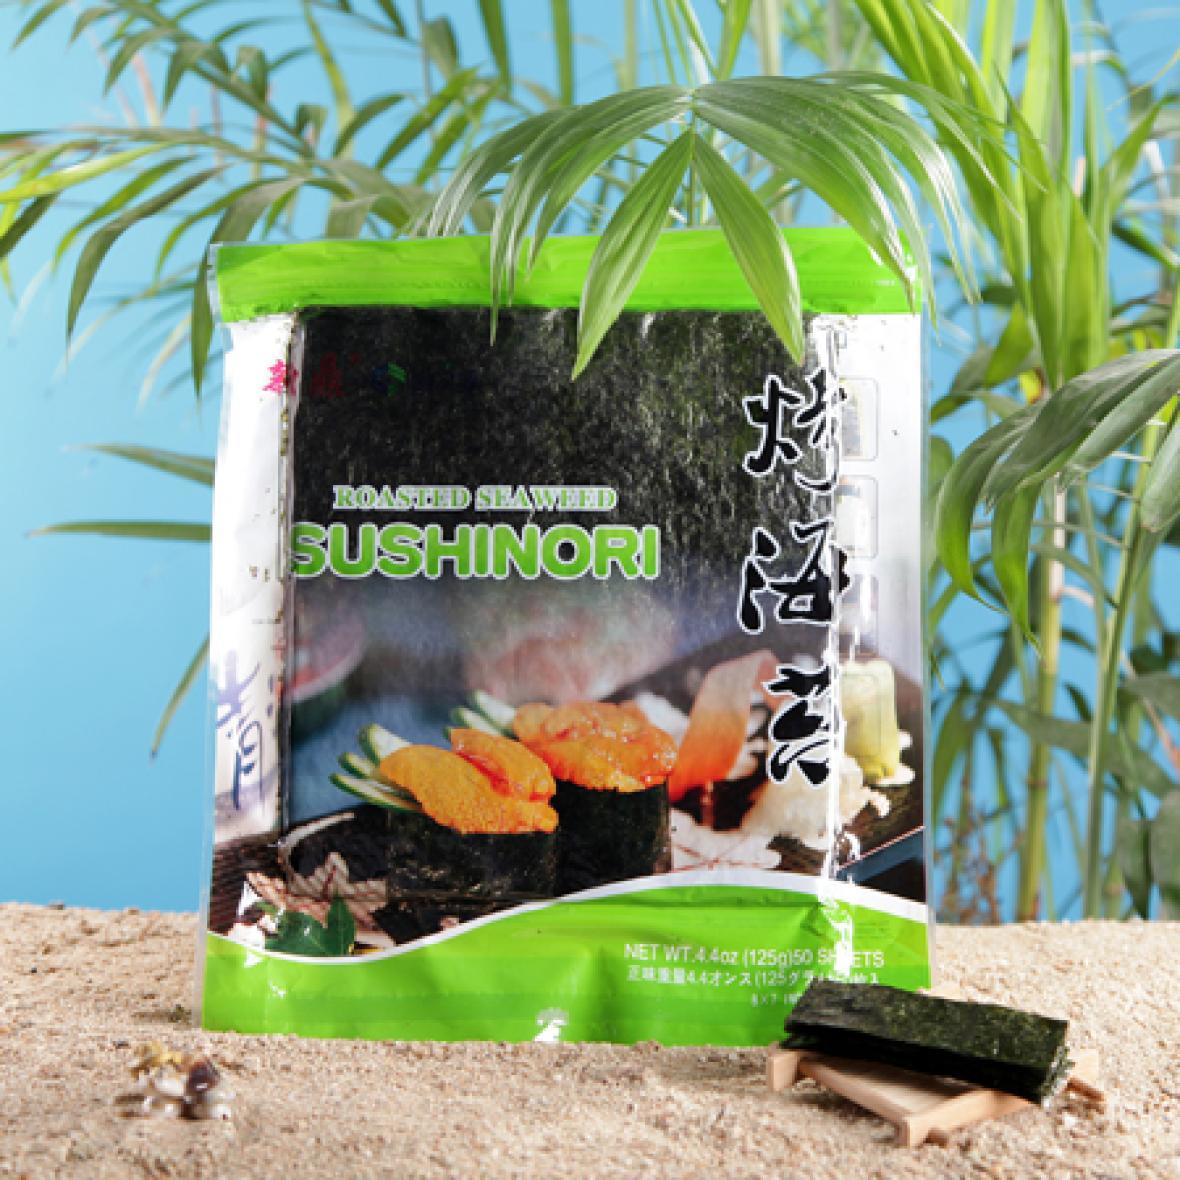 XZY Roasted Seaweed Sushi Nori, Green, 50 Sheets